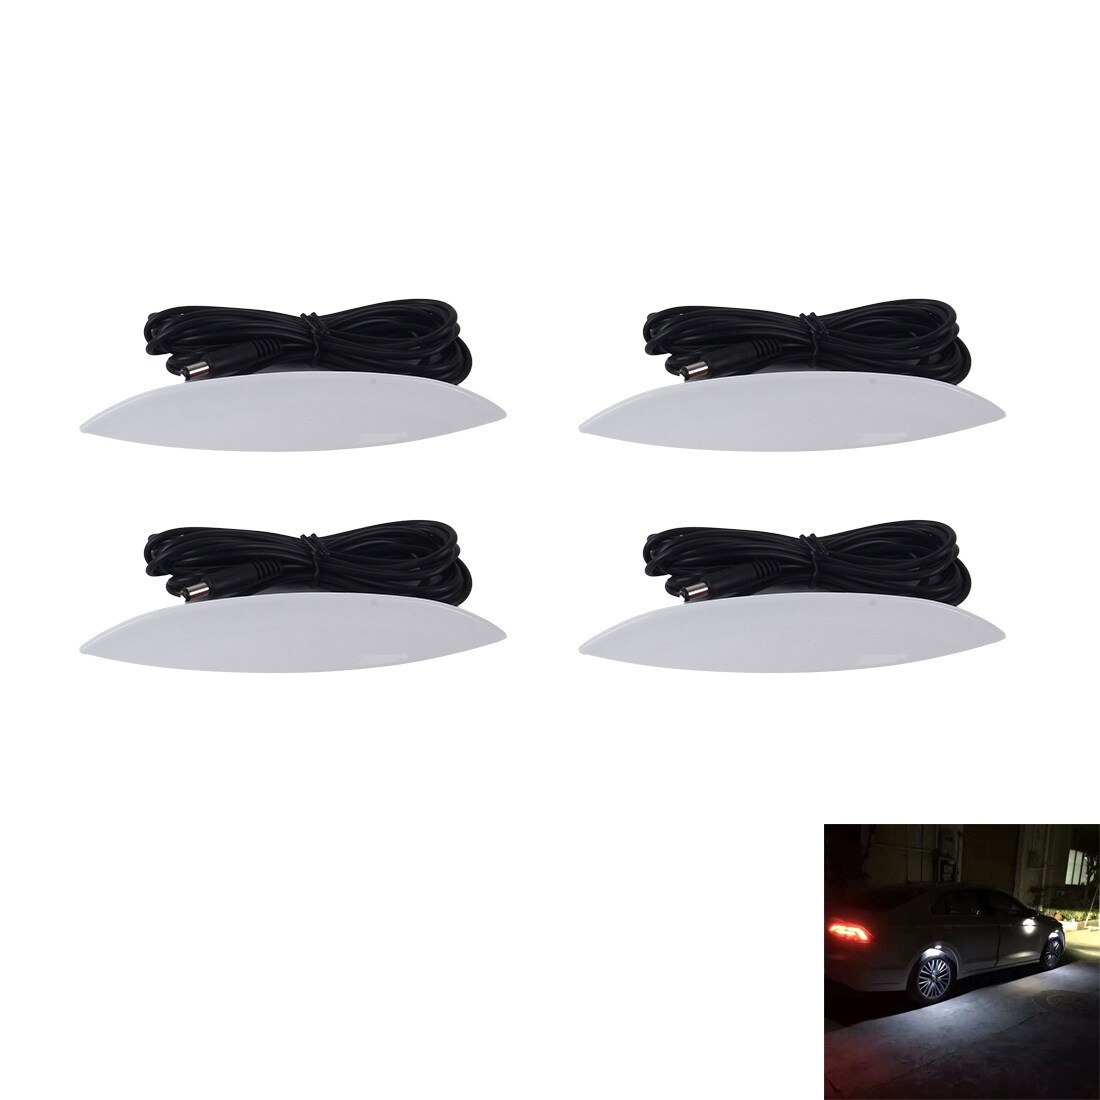 LED belysning bilkarosseri 4stk 3 Mode - Hvidt lys